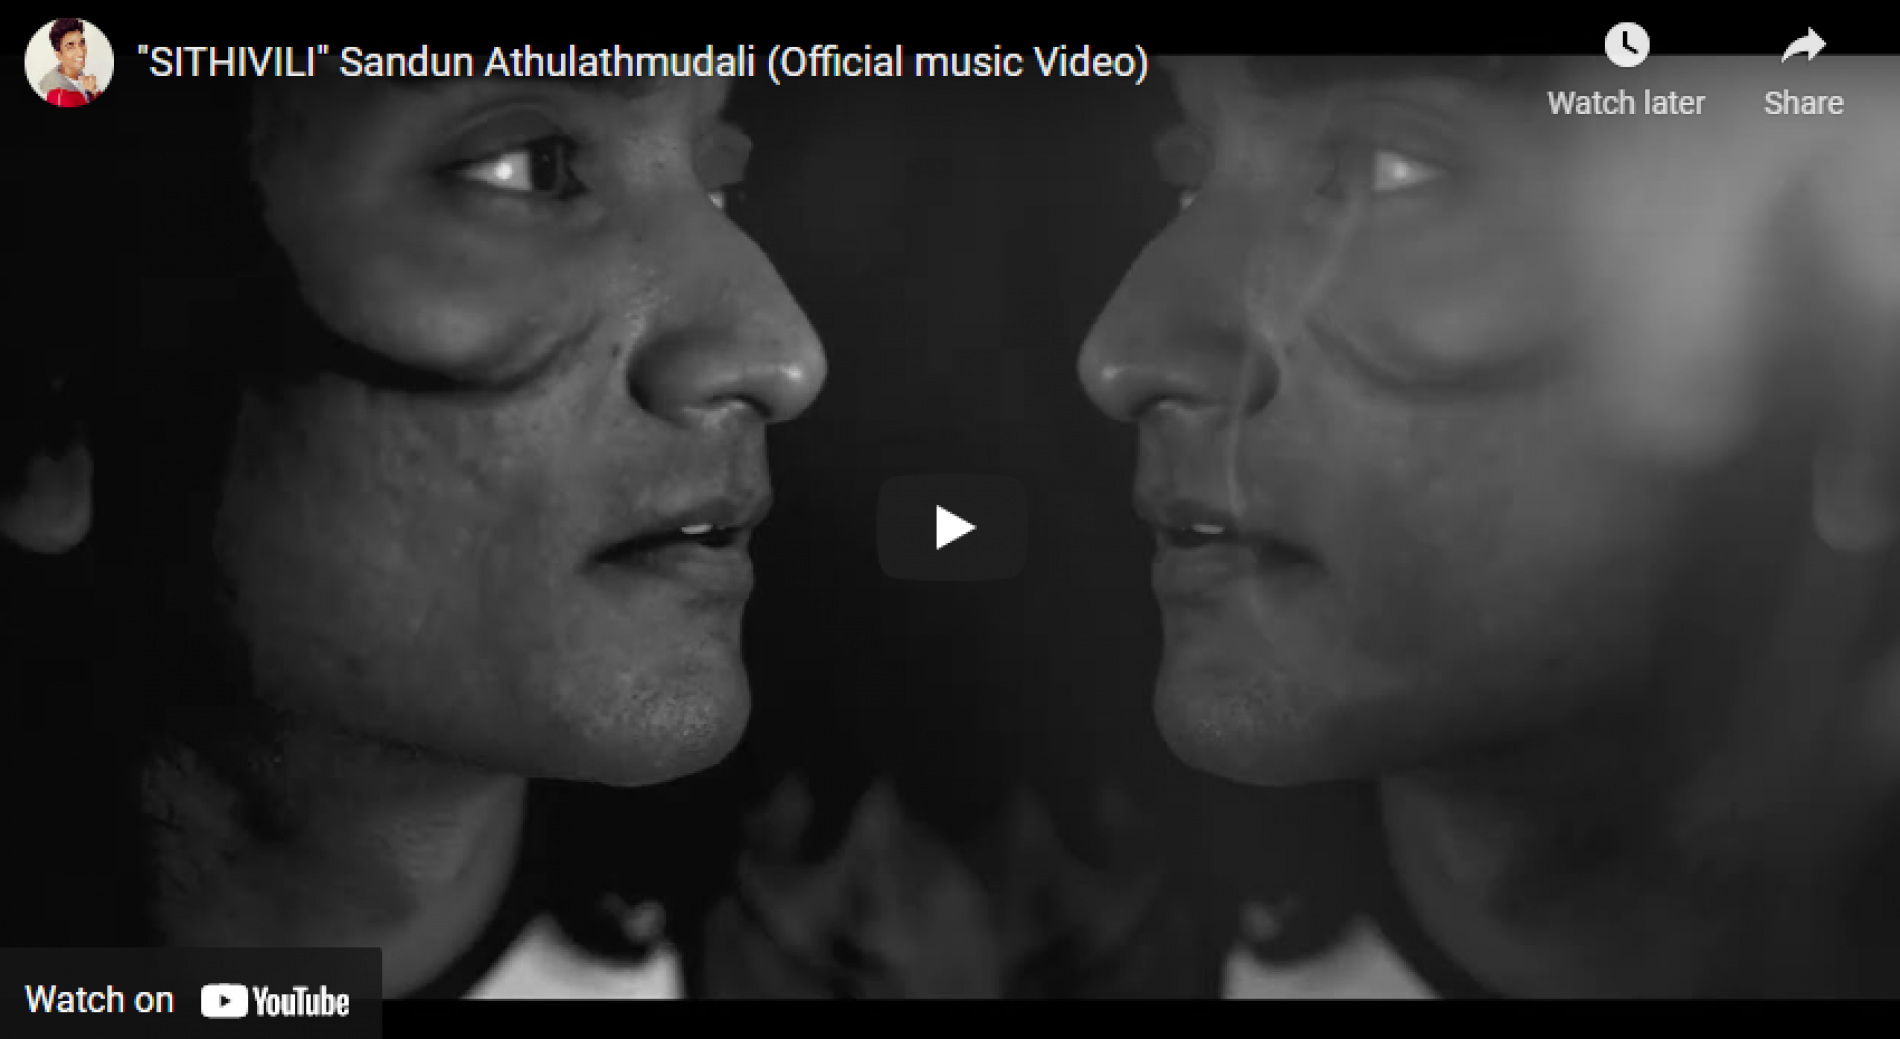 New Music : “Sithivili” Sandun Athulathmudali (Official music Video)